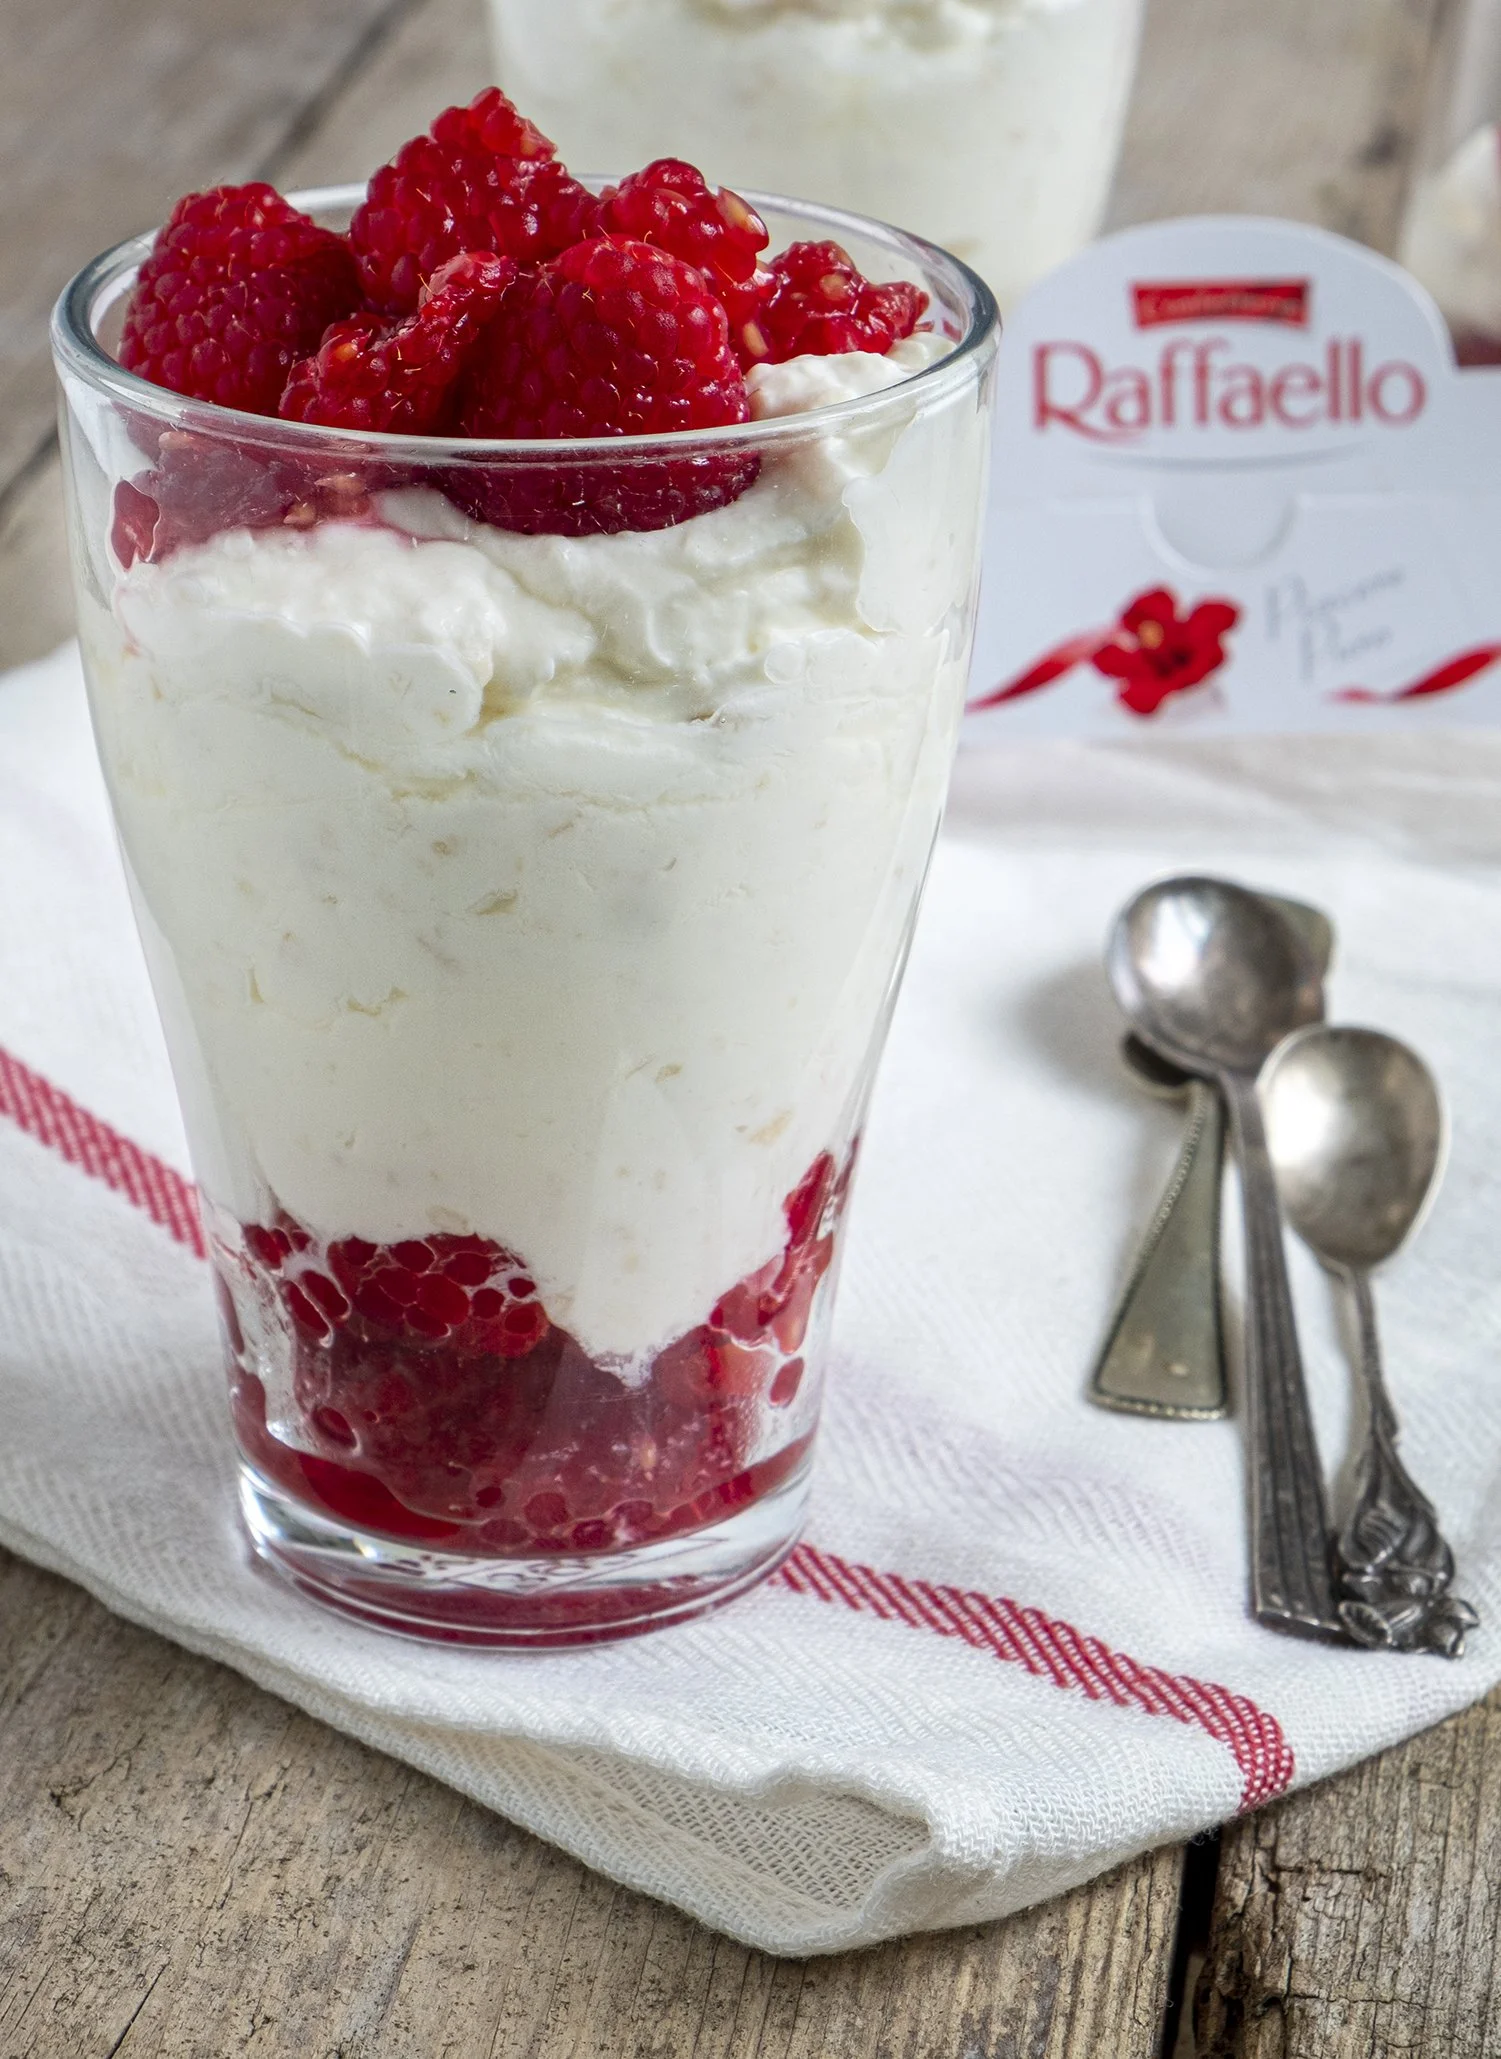 Raffaello dessert met verse frambozen